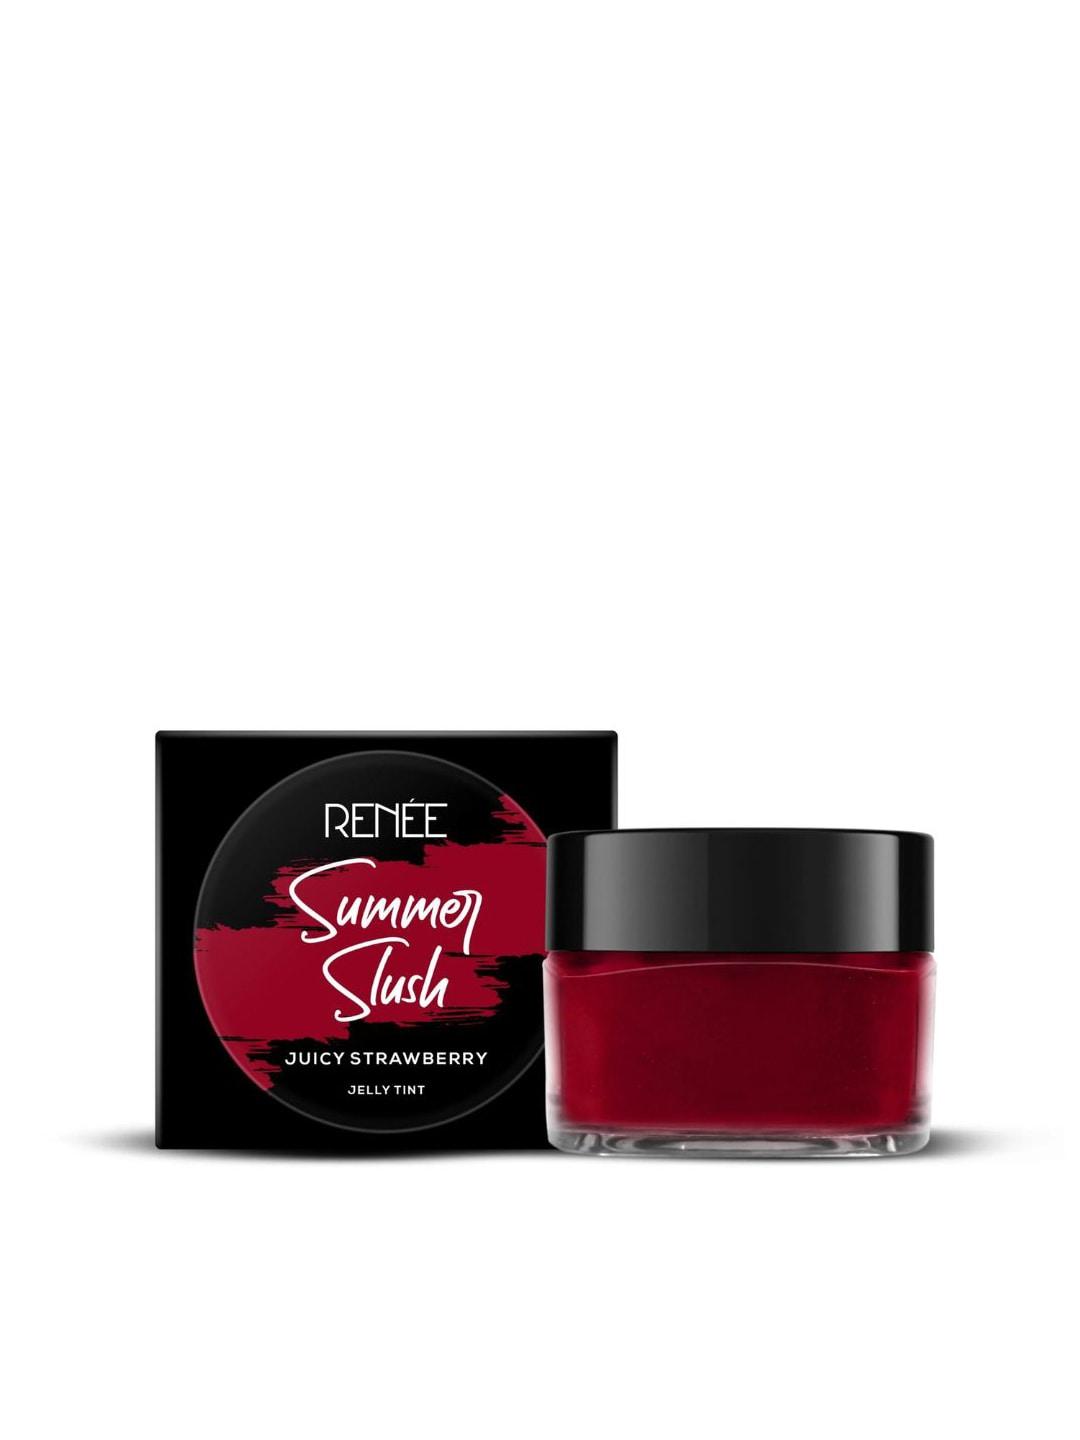 renee summer slush jelly tint - juicy strawberry 13g